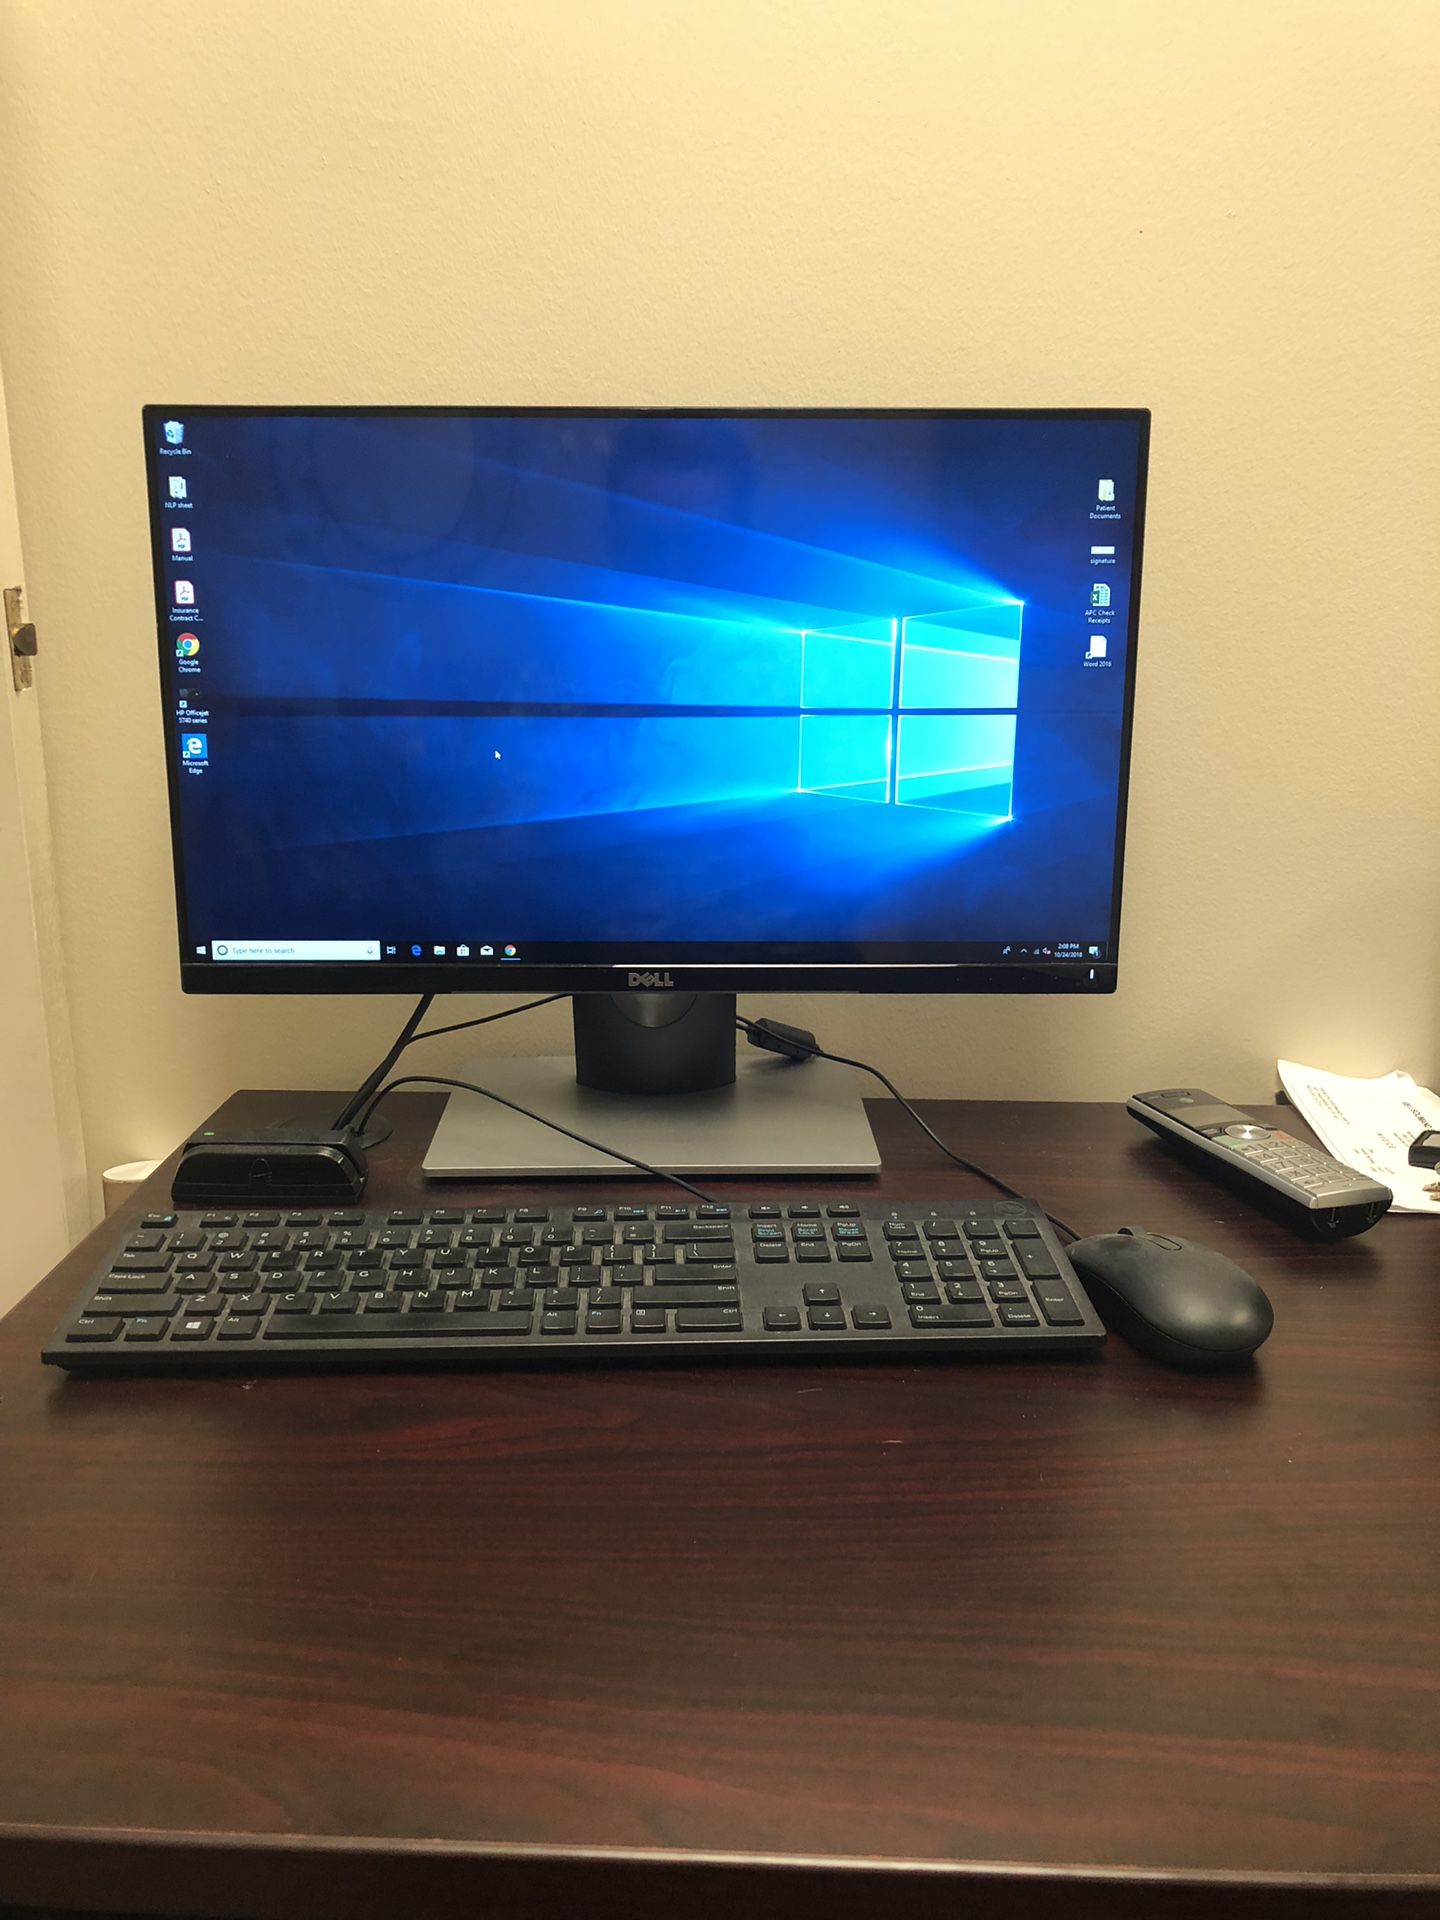 Dell Inspiron computer, monitor and accessories